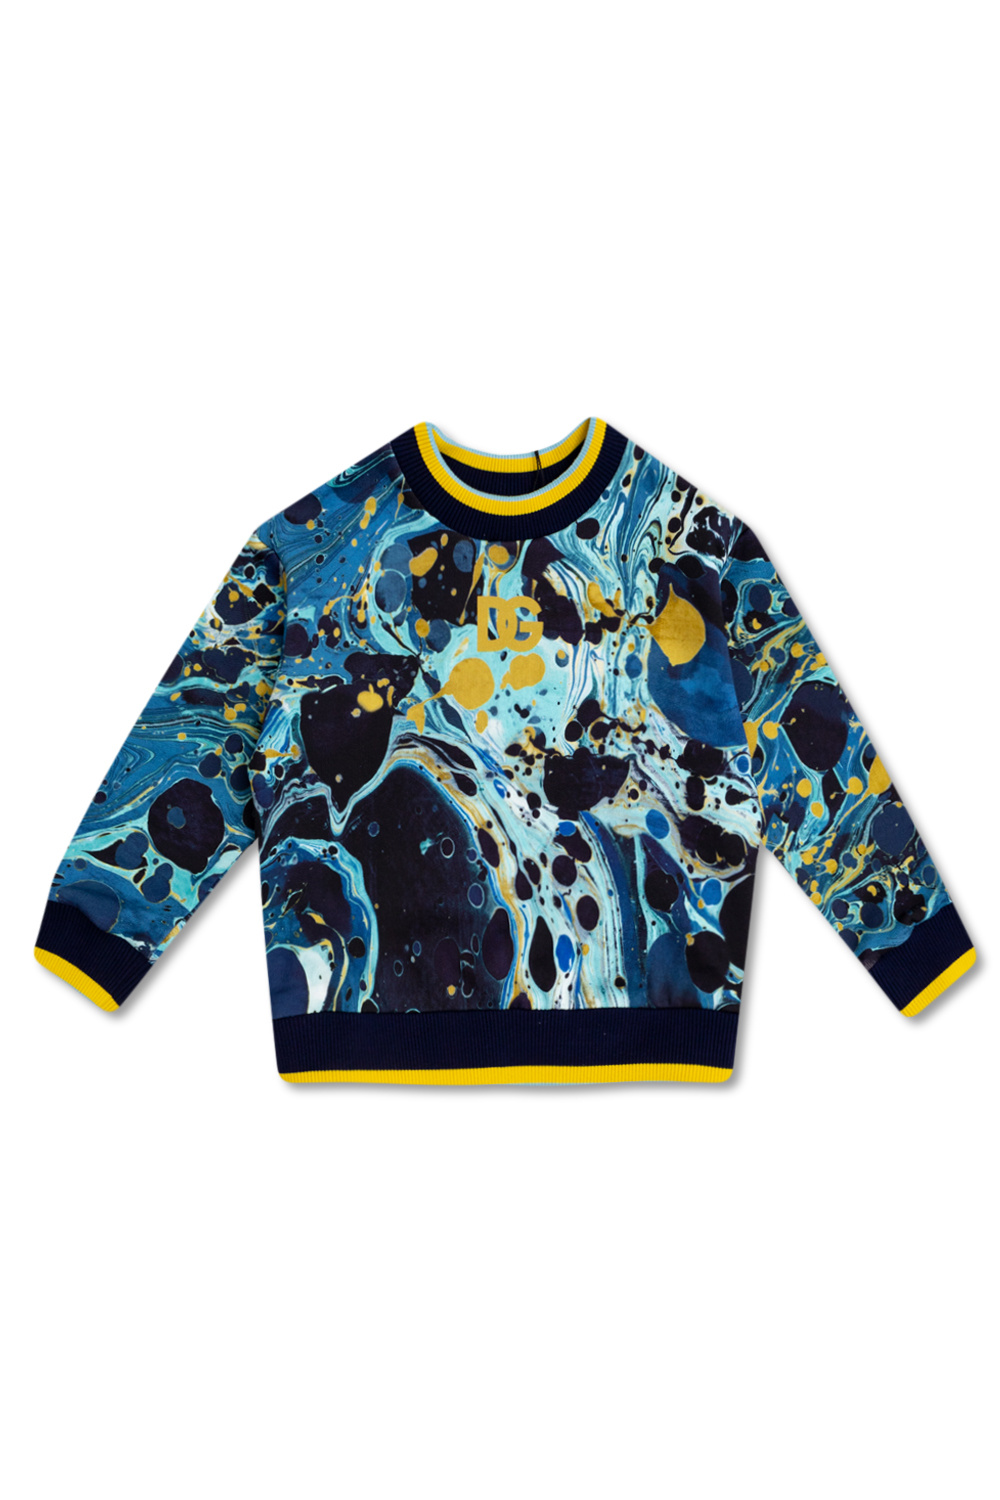 dolce & gabbana blue lace pumps Patterned sweatshirt